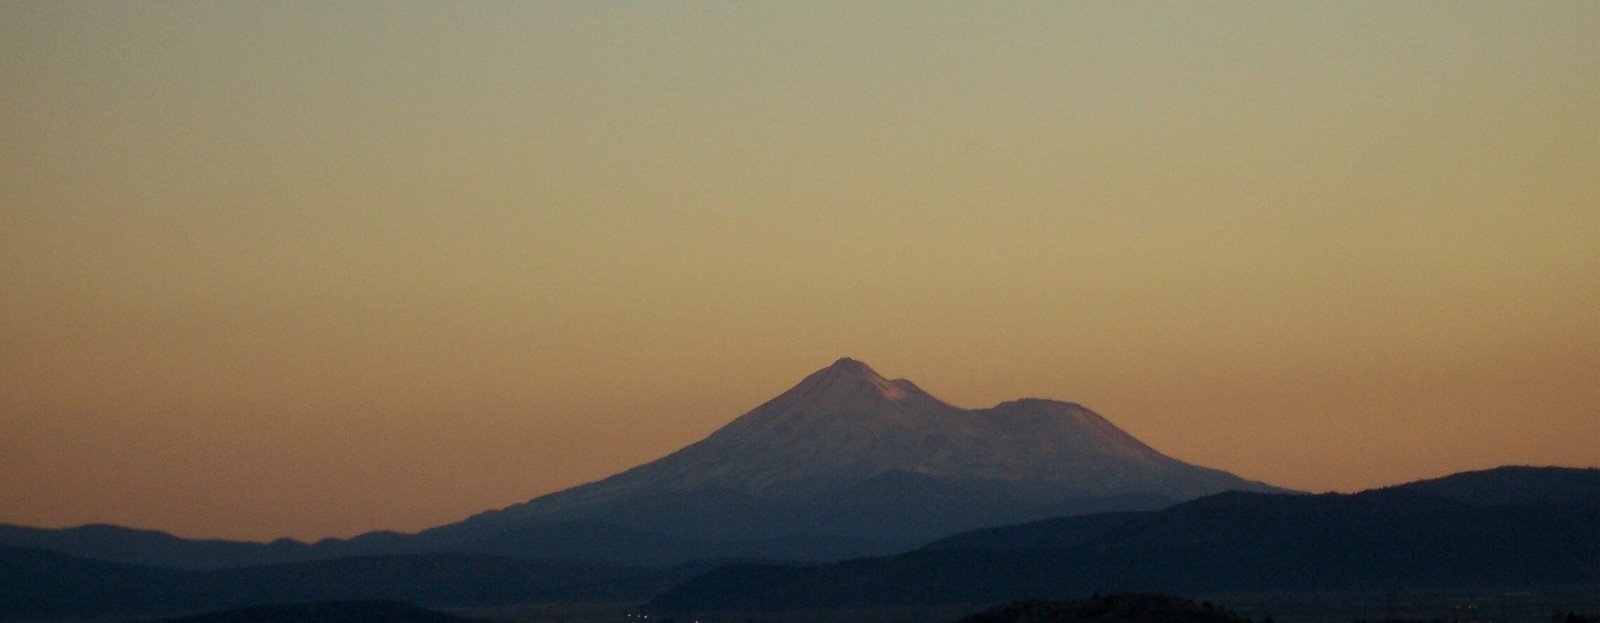 [Mt.+Shasta+at+sunset.jpg]